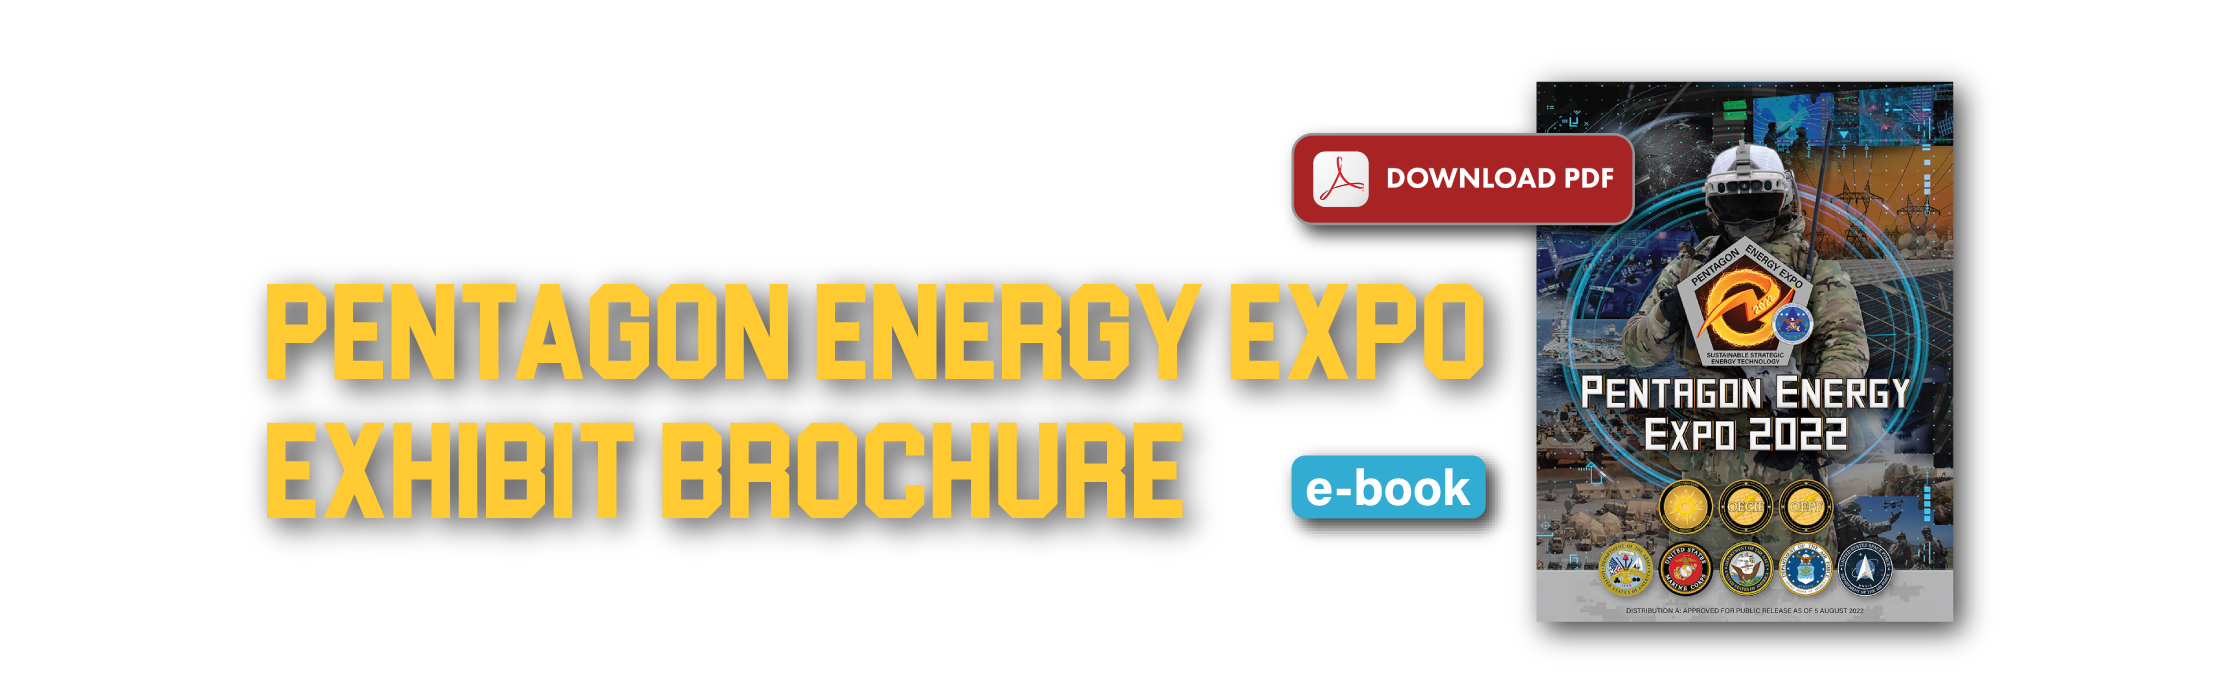 Click to download Pentagon Energy Expo 2022 Exhibit Brochure PDF file